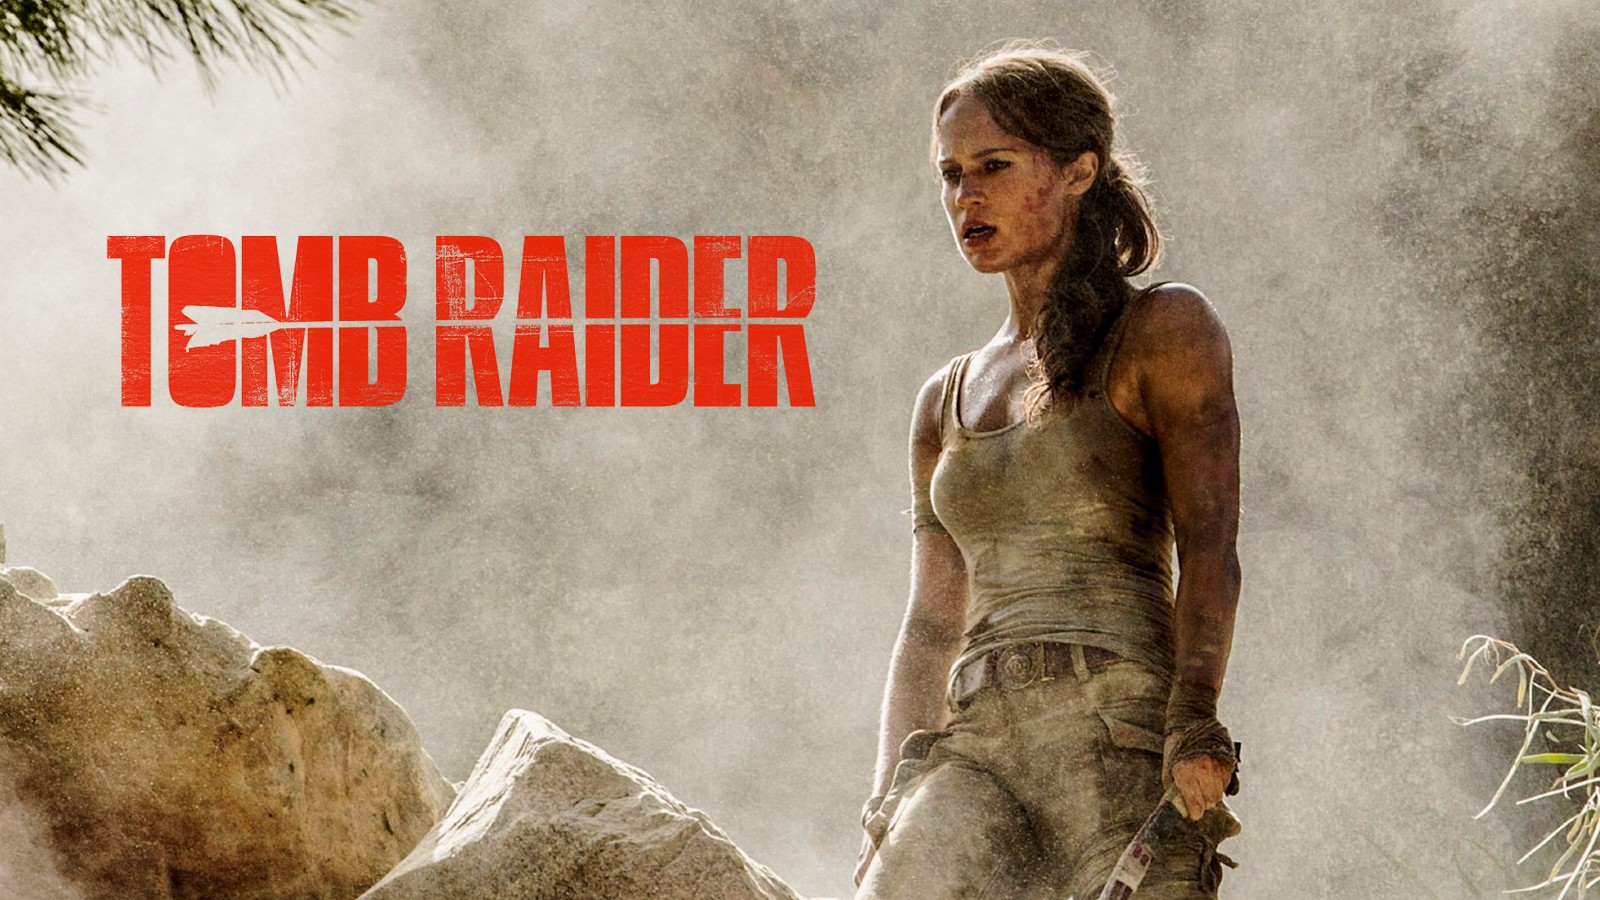 Tomb Raider 2 sets director Ben Wheatley, 2021 release date